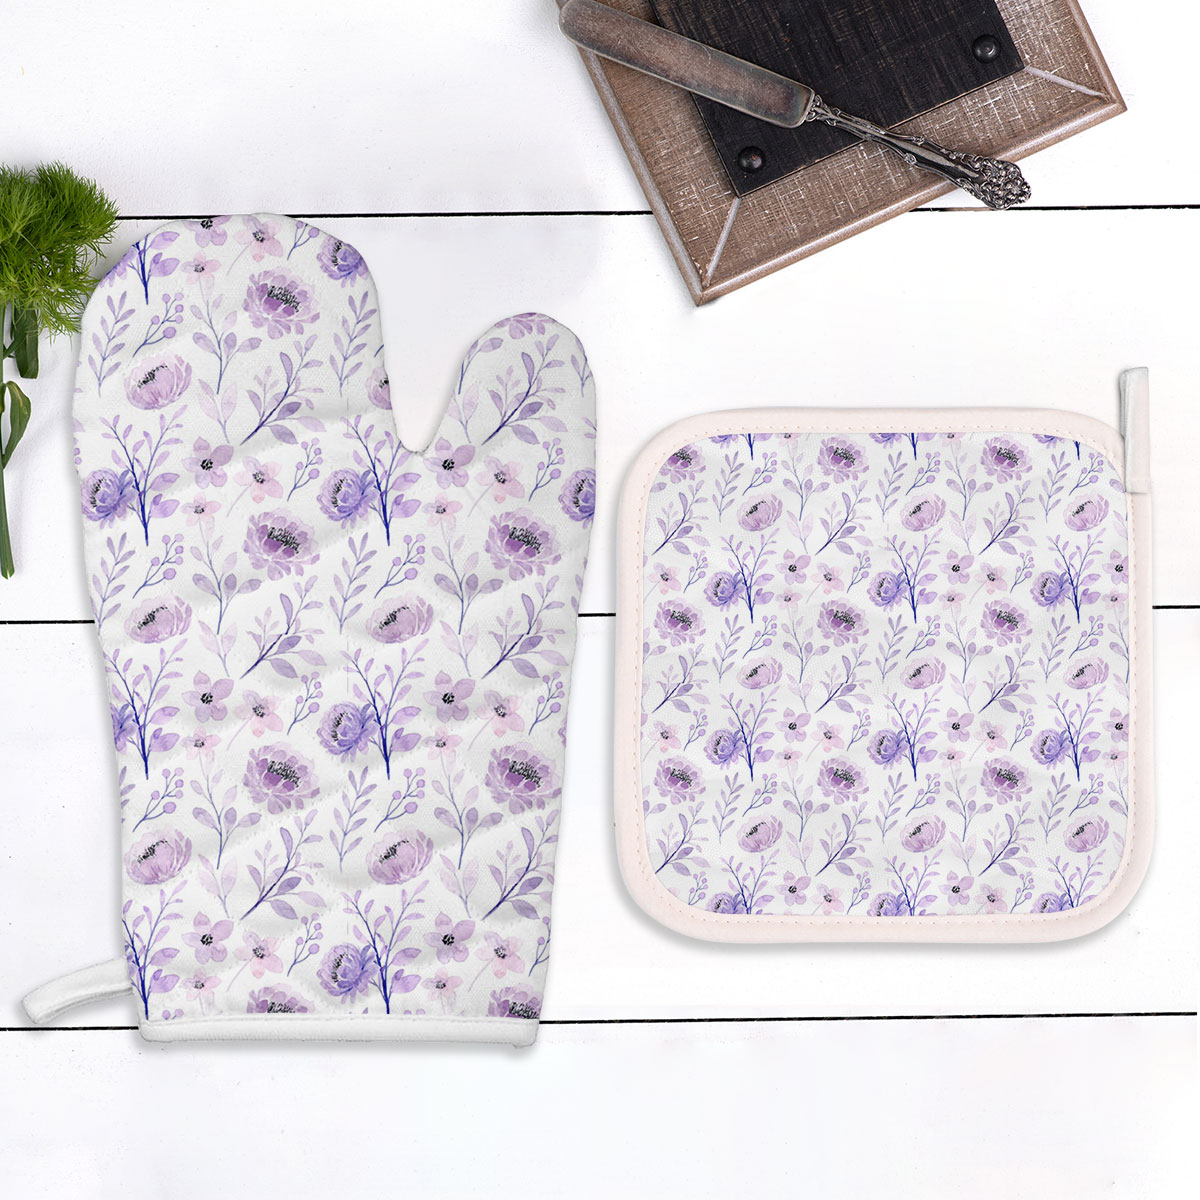 Soft Purple Floral Seamless Pattern Oven Mitts Pot Holder Set